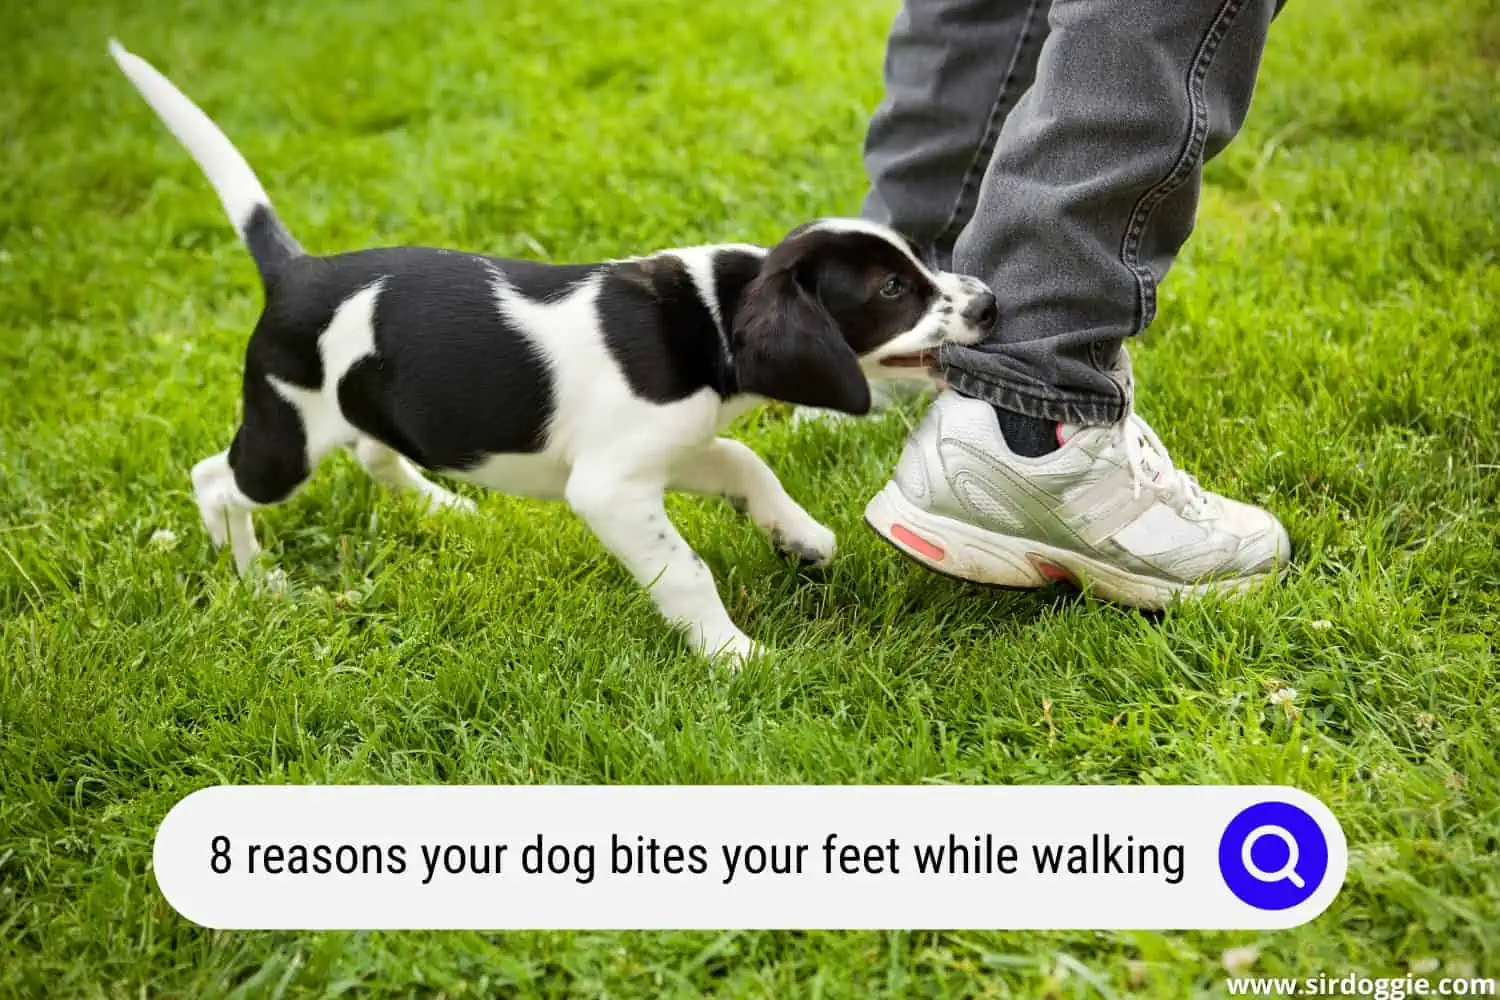 why dog bite feet walking